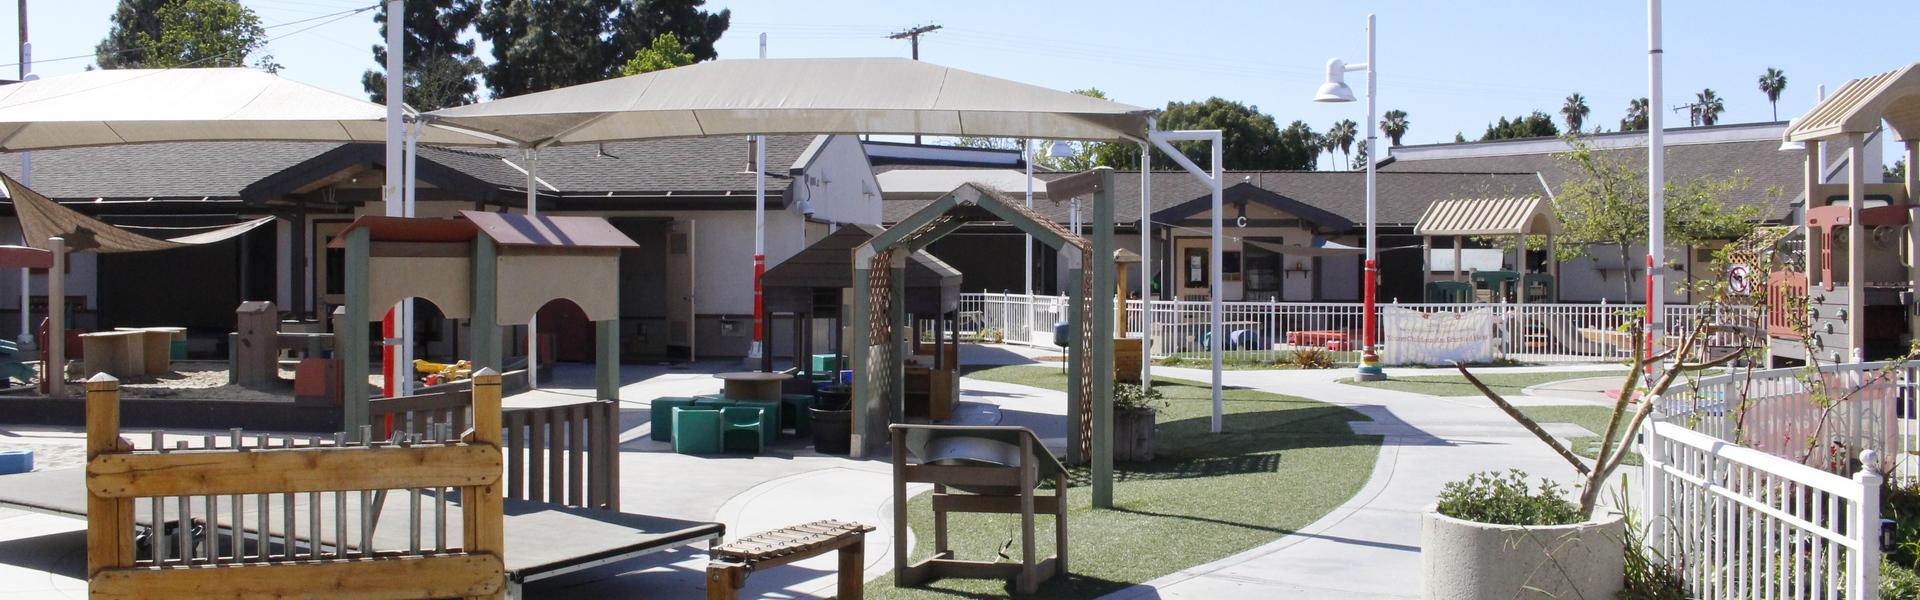 The playground inside the Child Development Center.